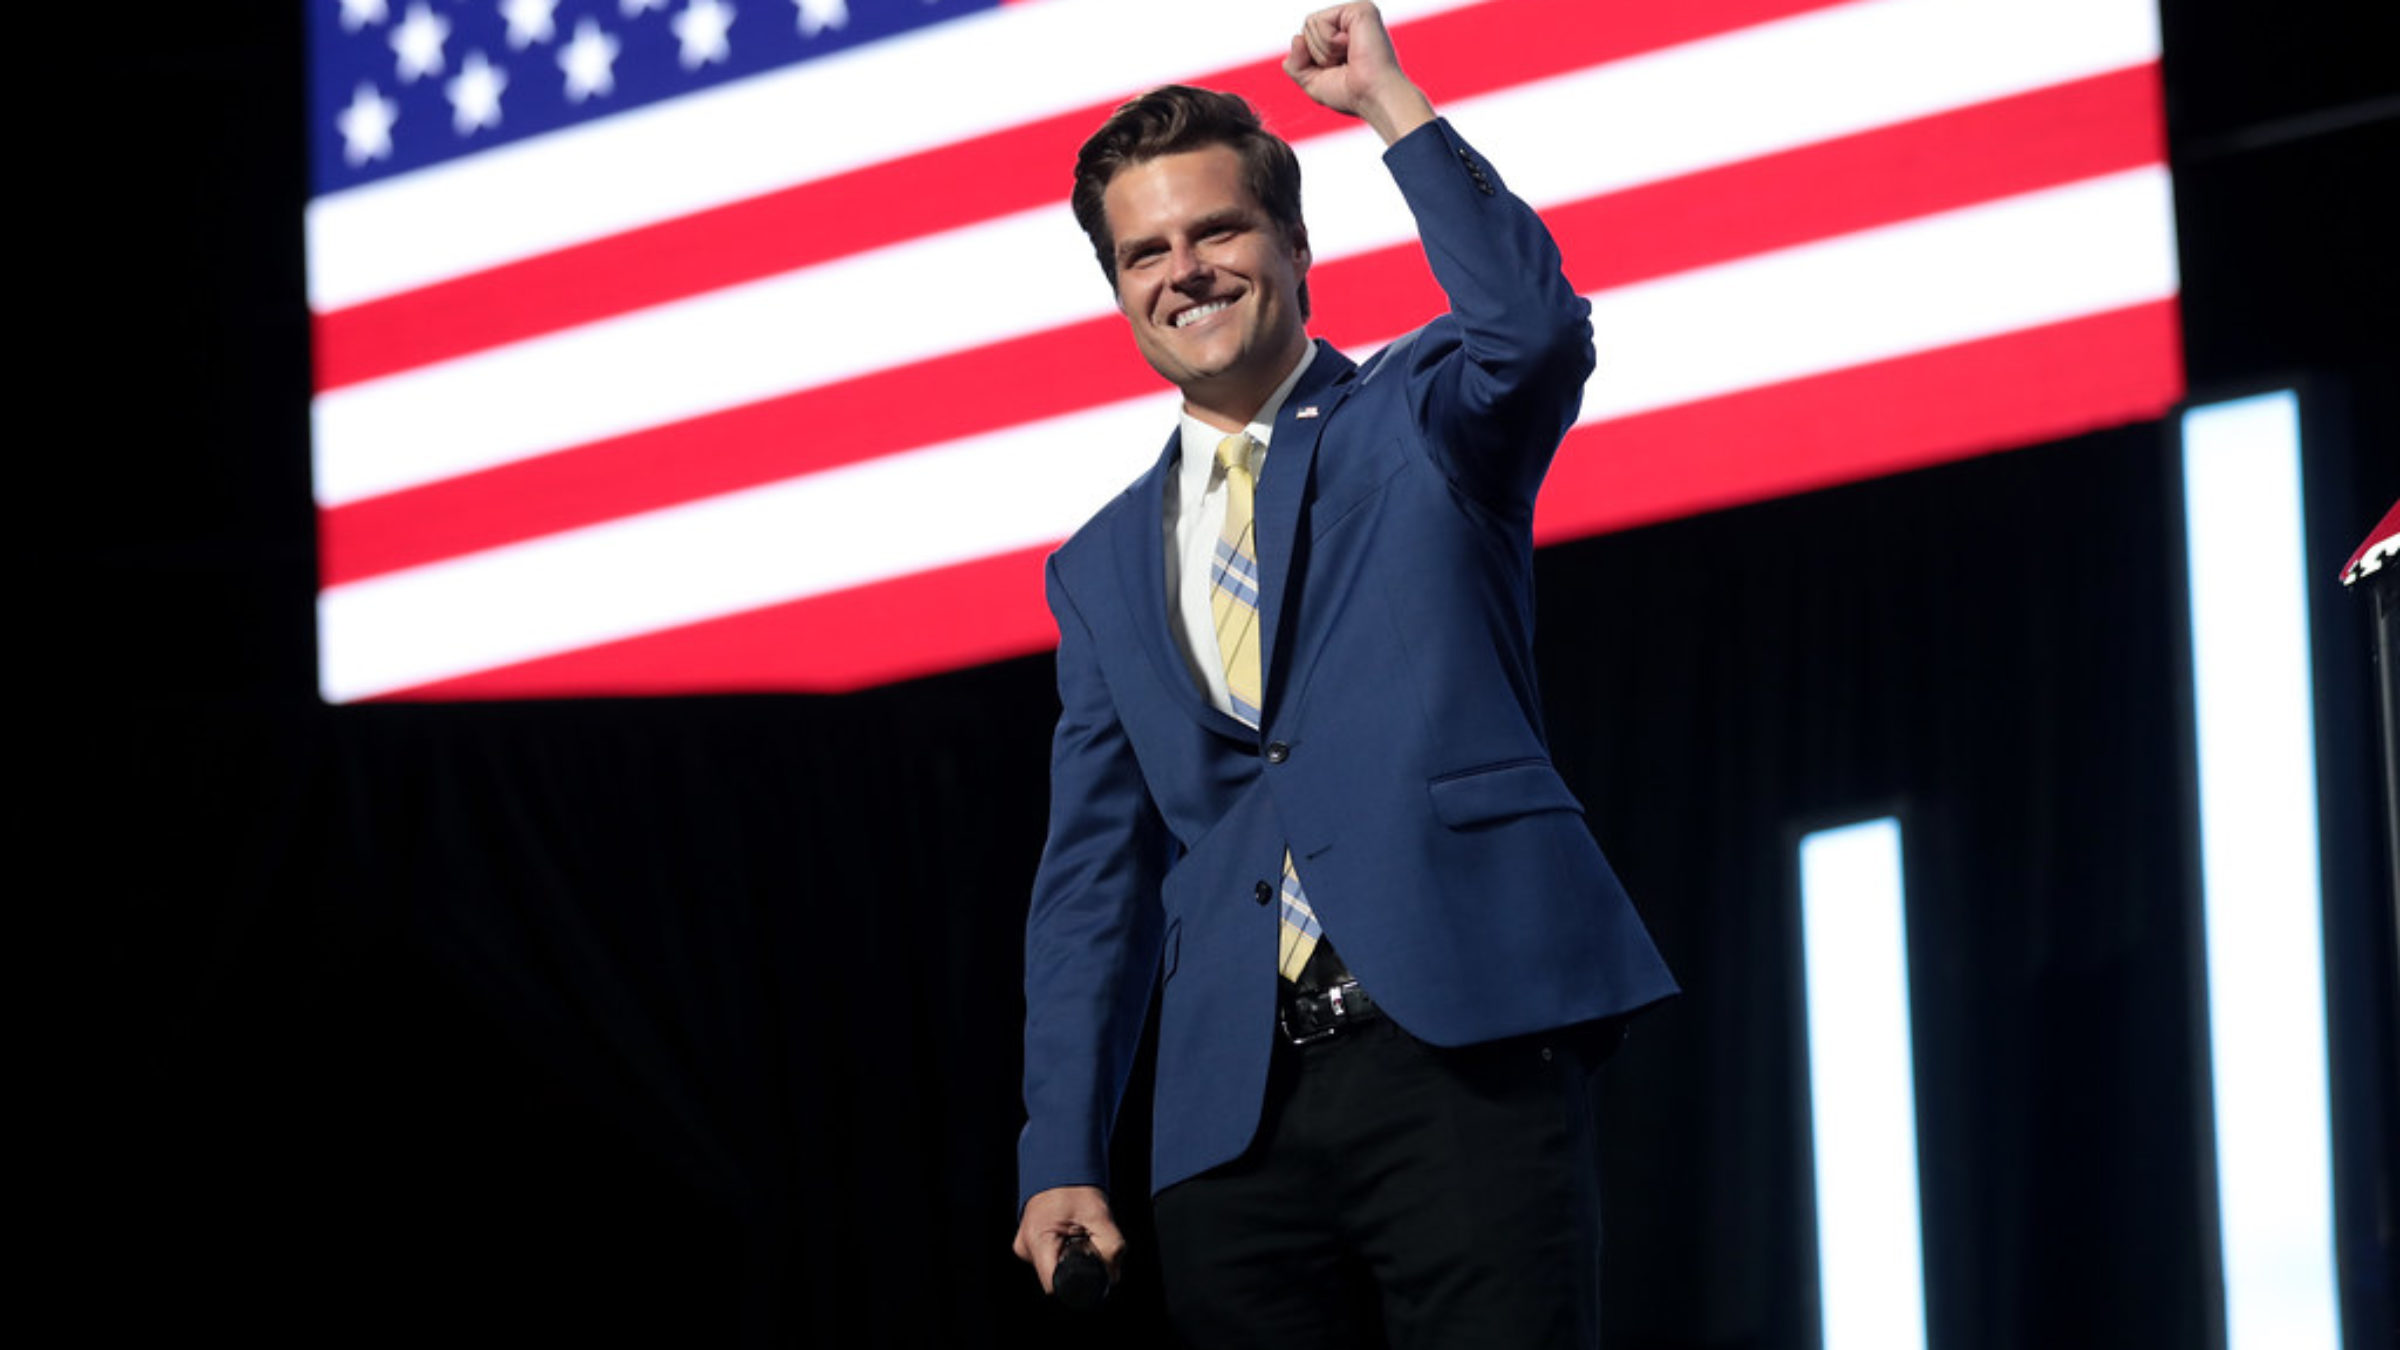 Matt Gaetz raises his fist against a backdrop of the American flag